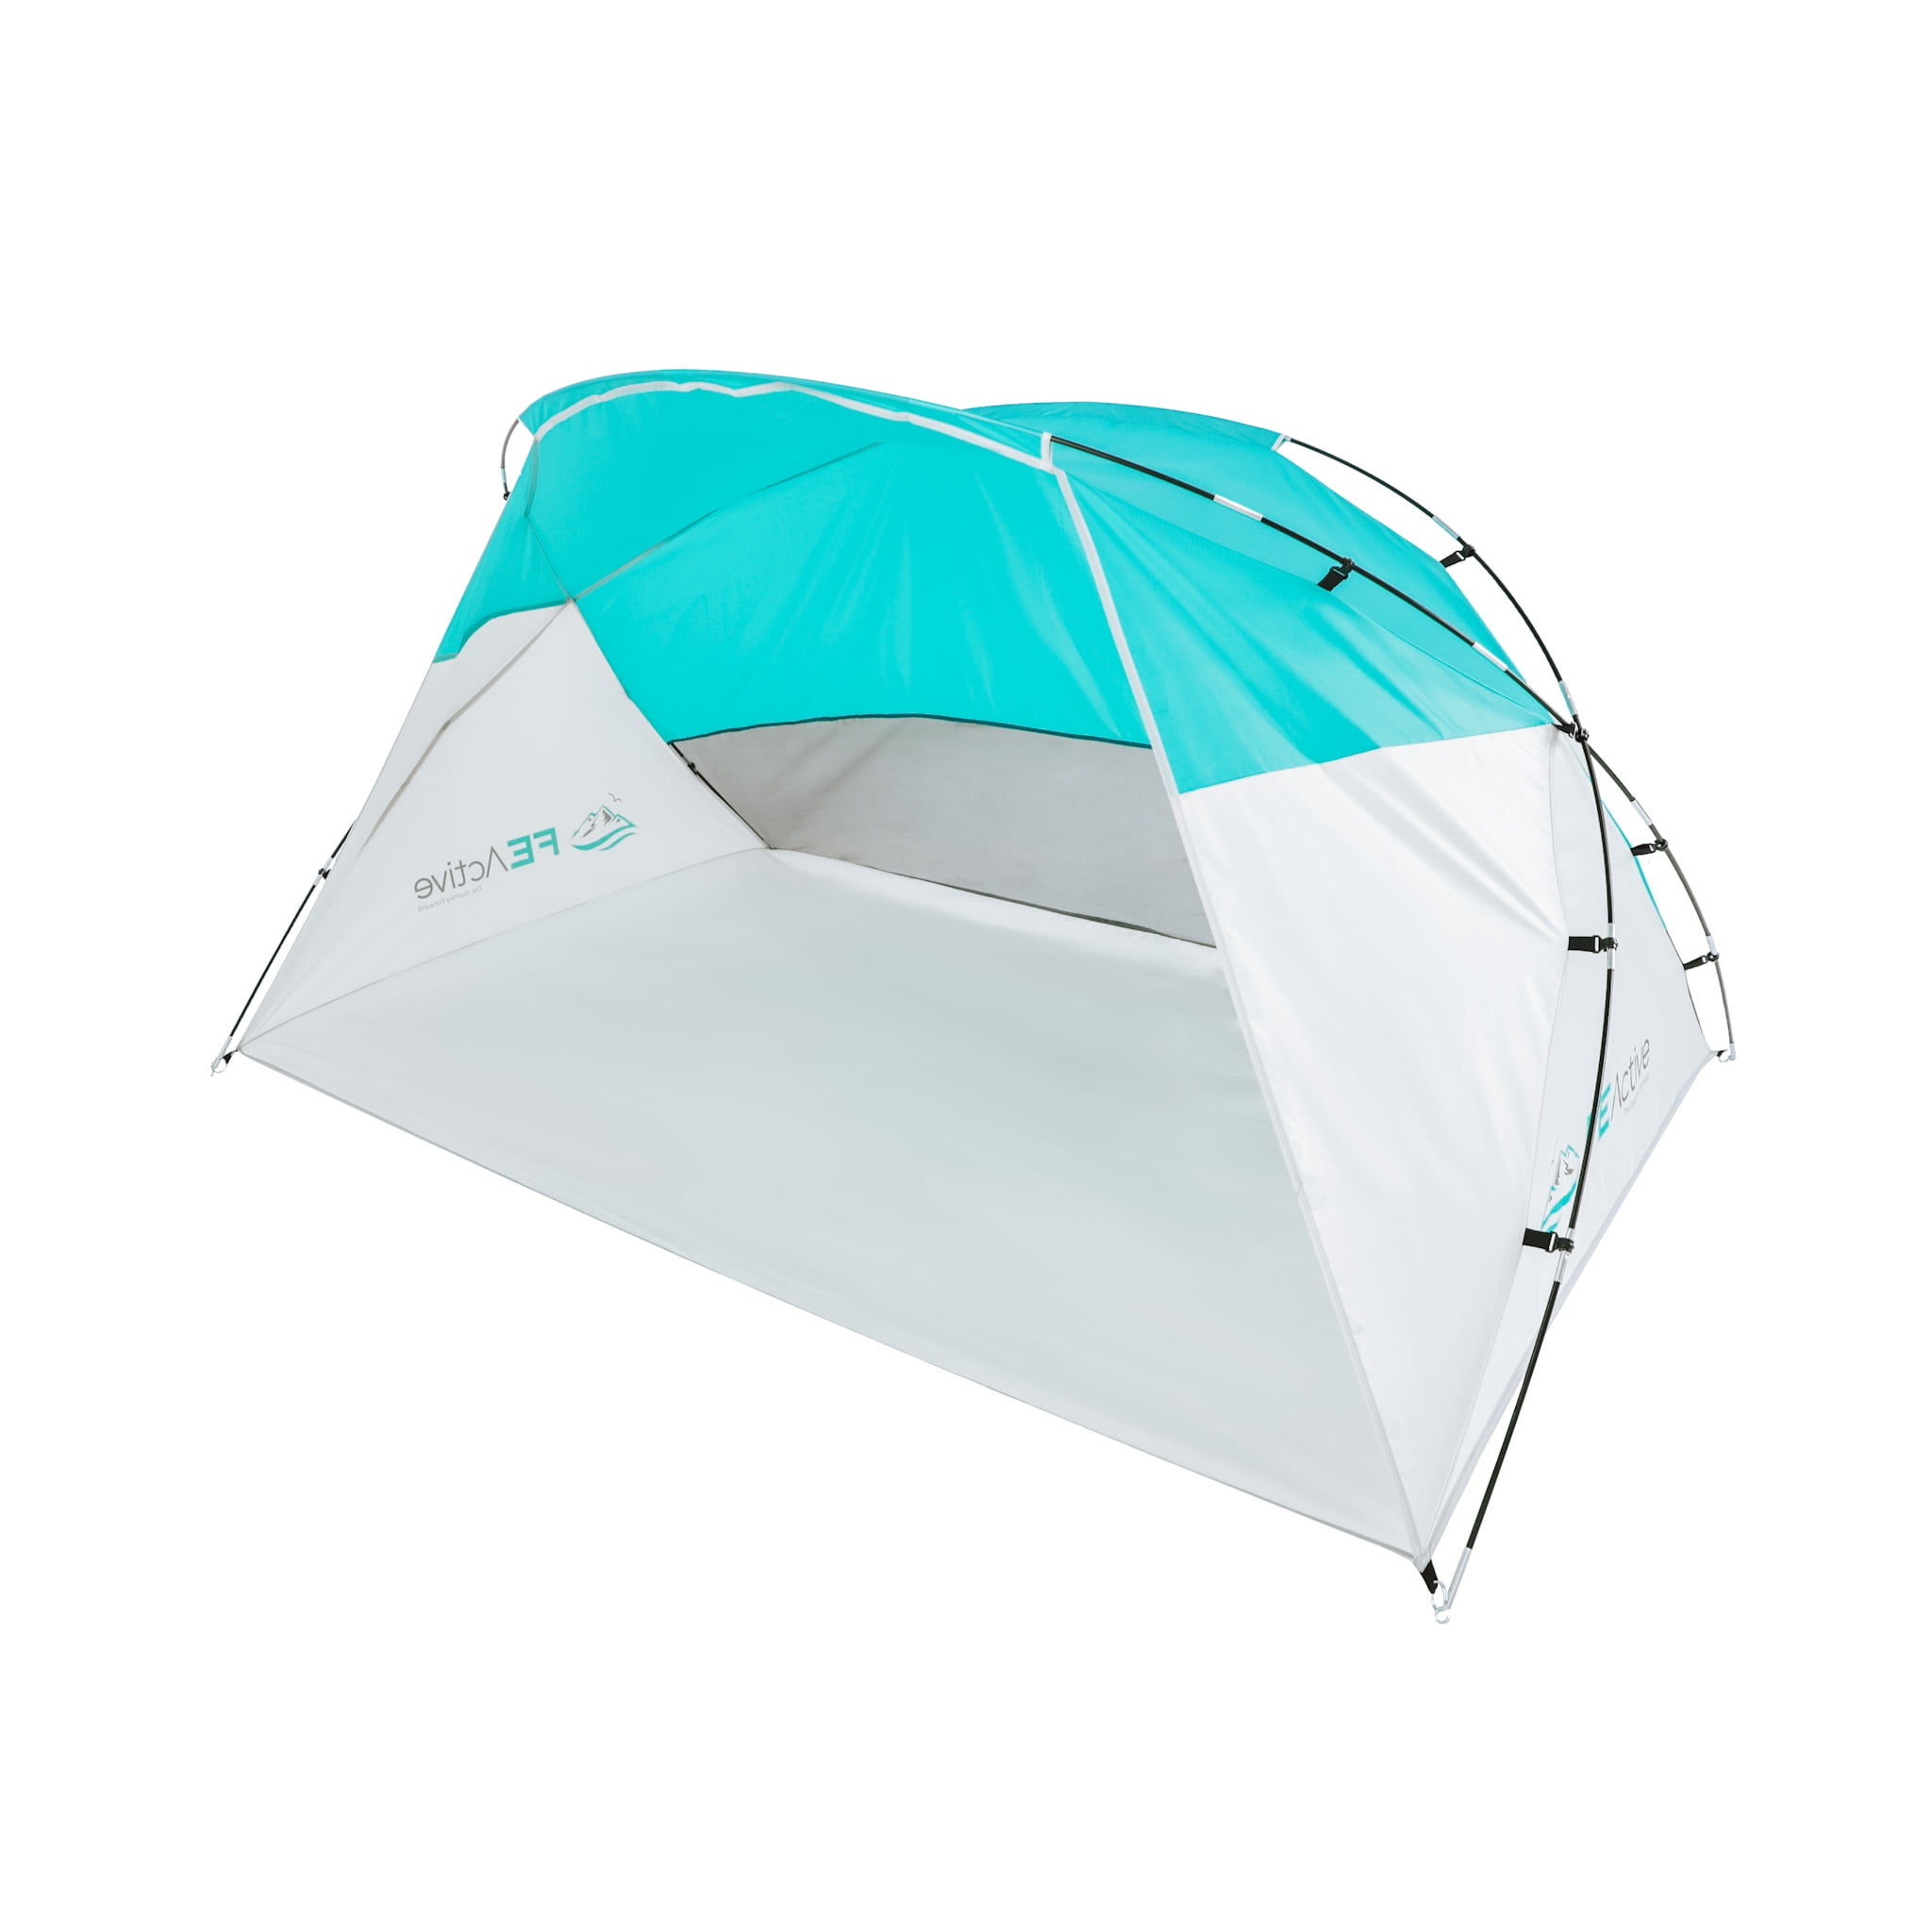 Yello Brand Pop Up Beach Tent Outdoor Sun Shelter Beach Garden Picnic 